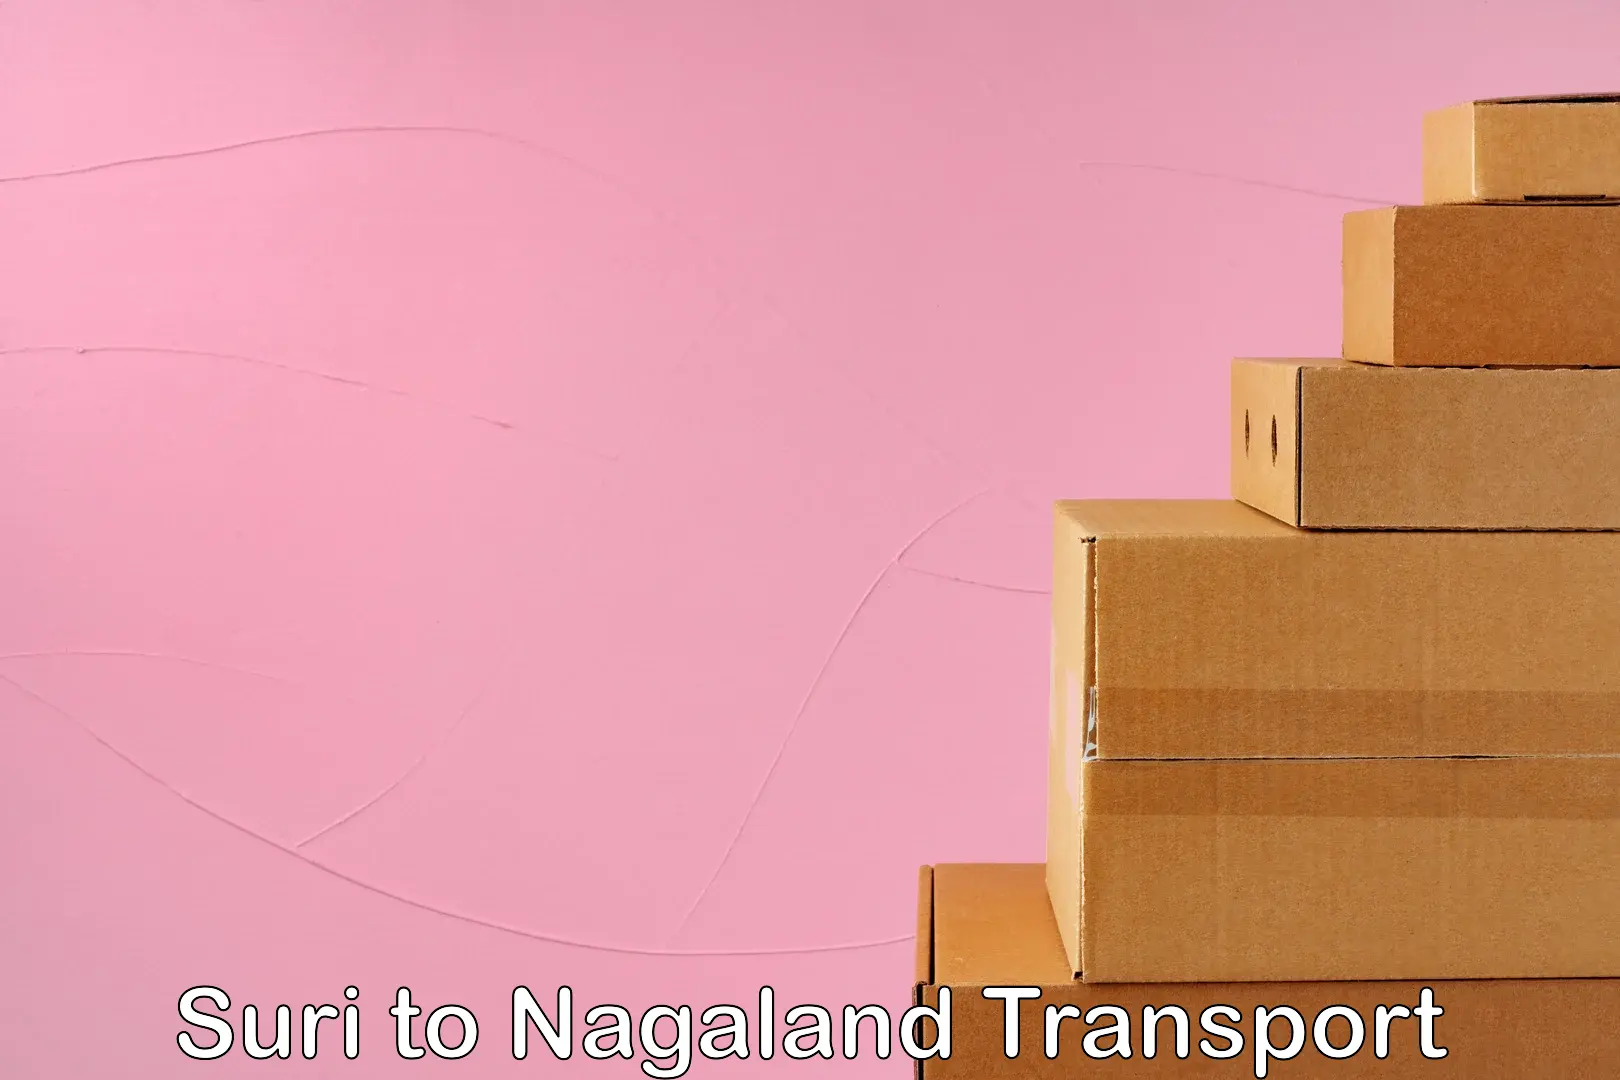 Delivery service Suri to Nagaland